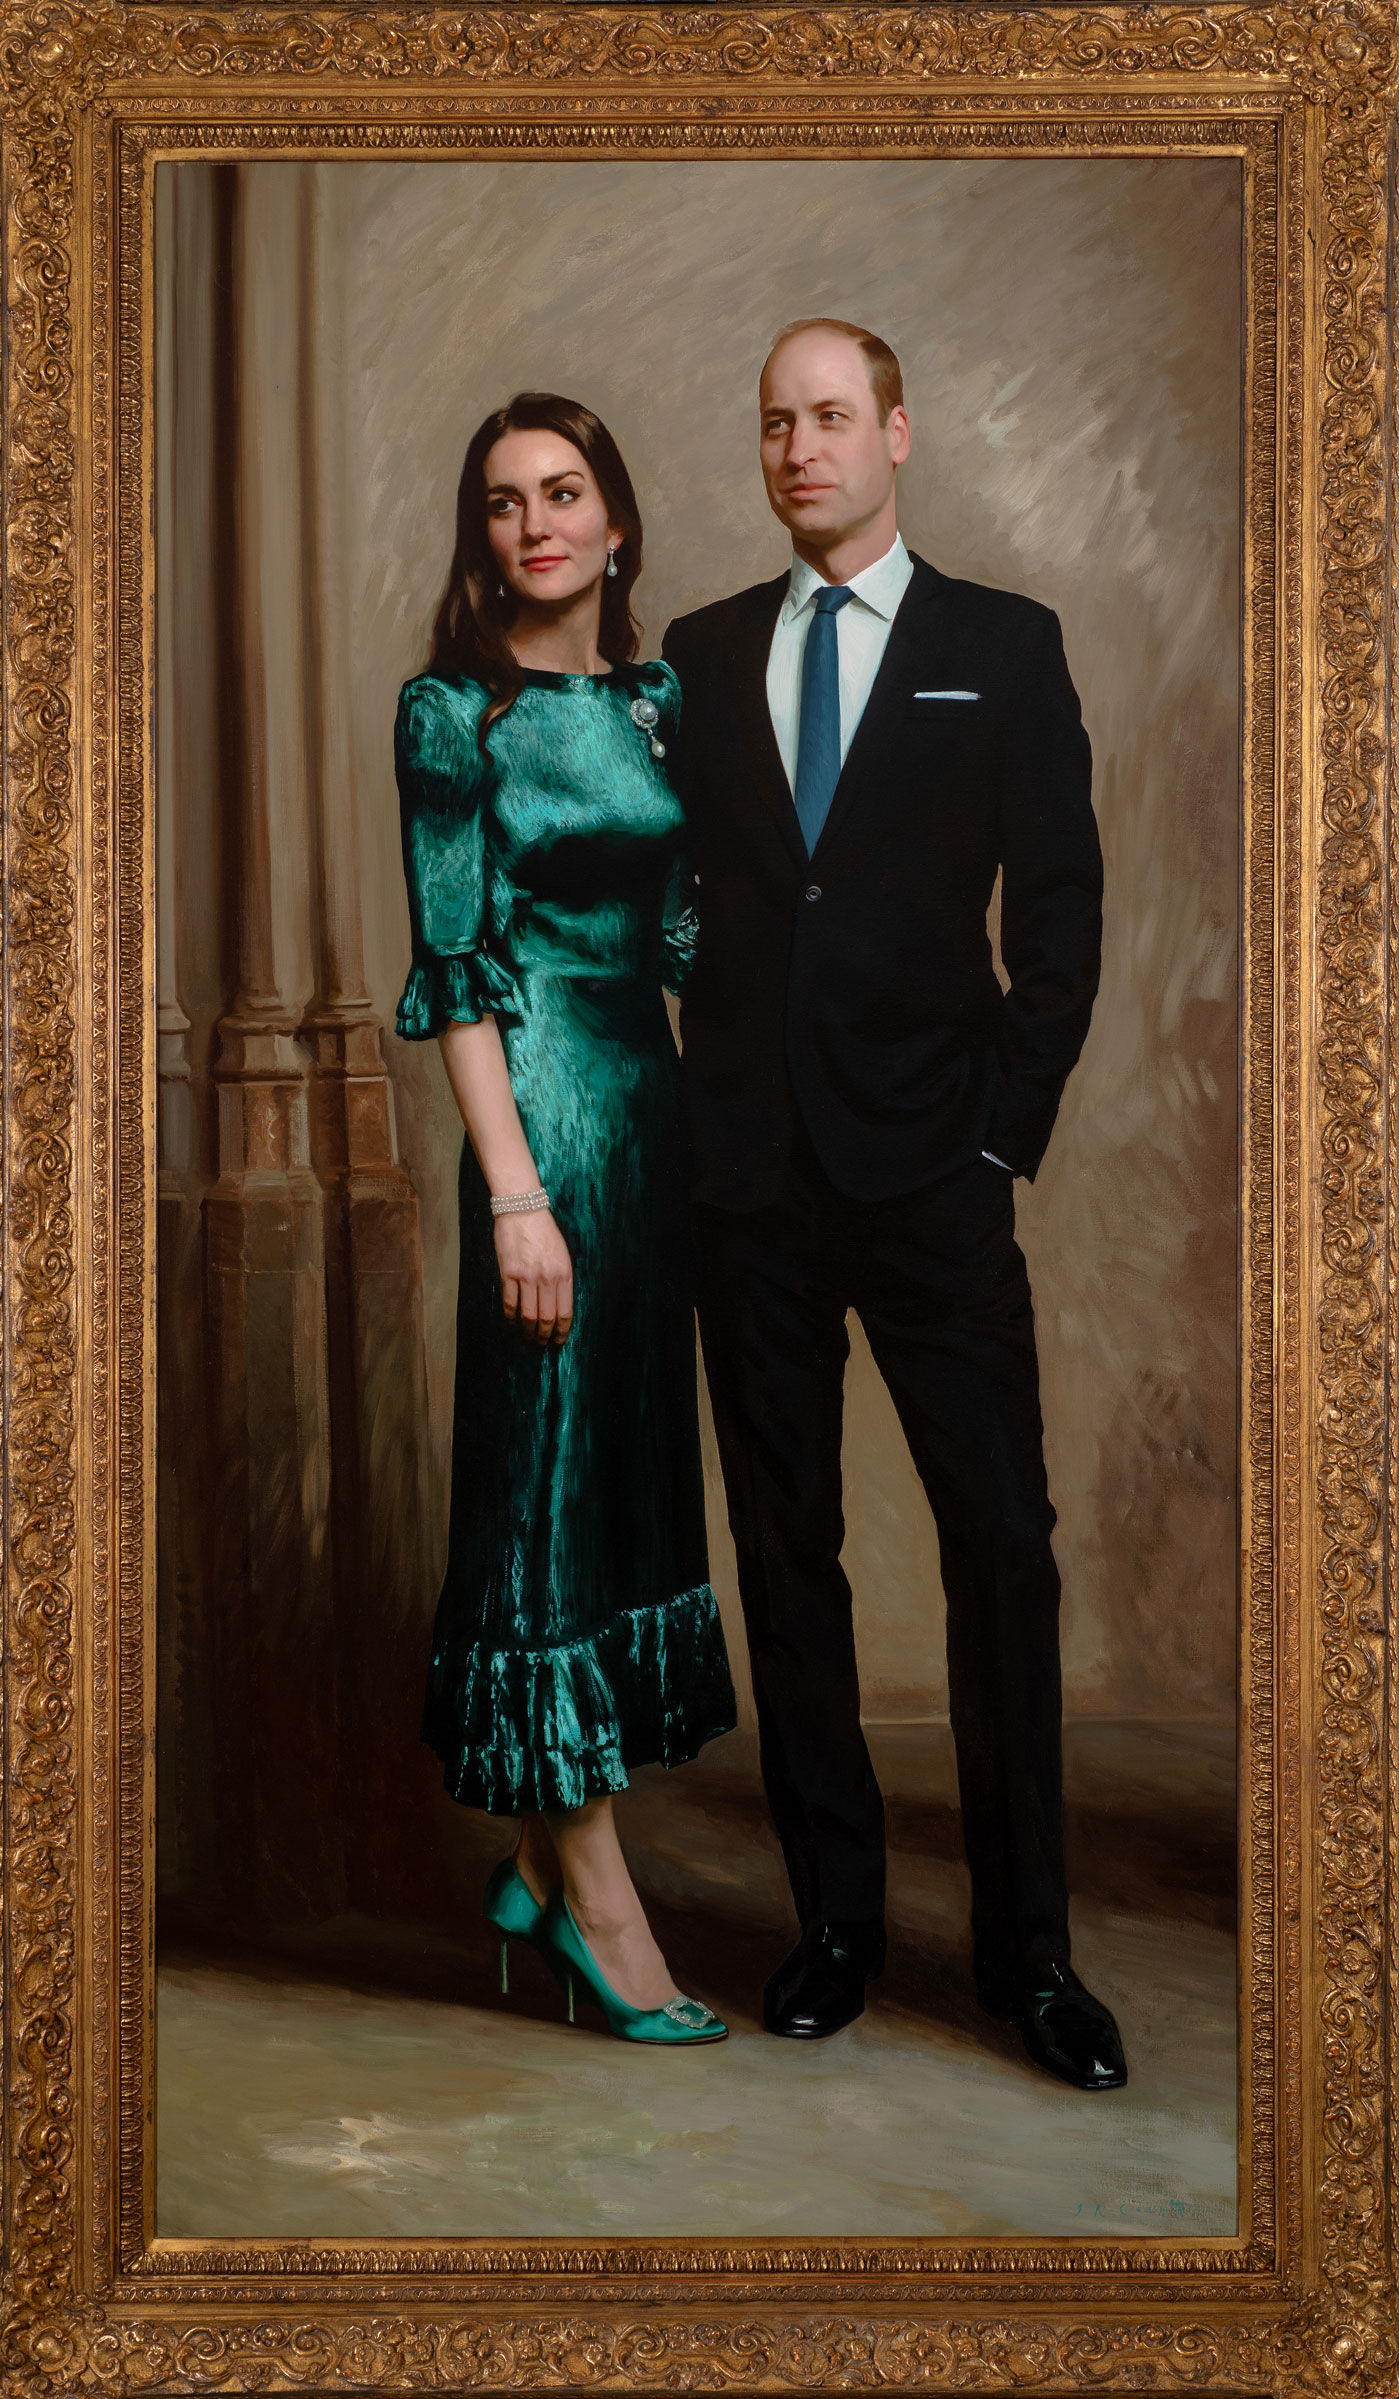 Prince William Kate Middleton joint portrait